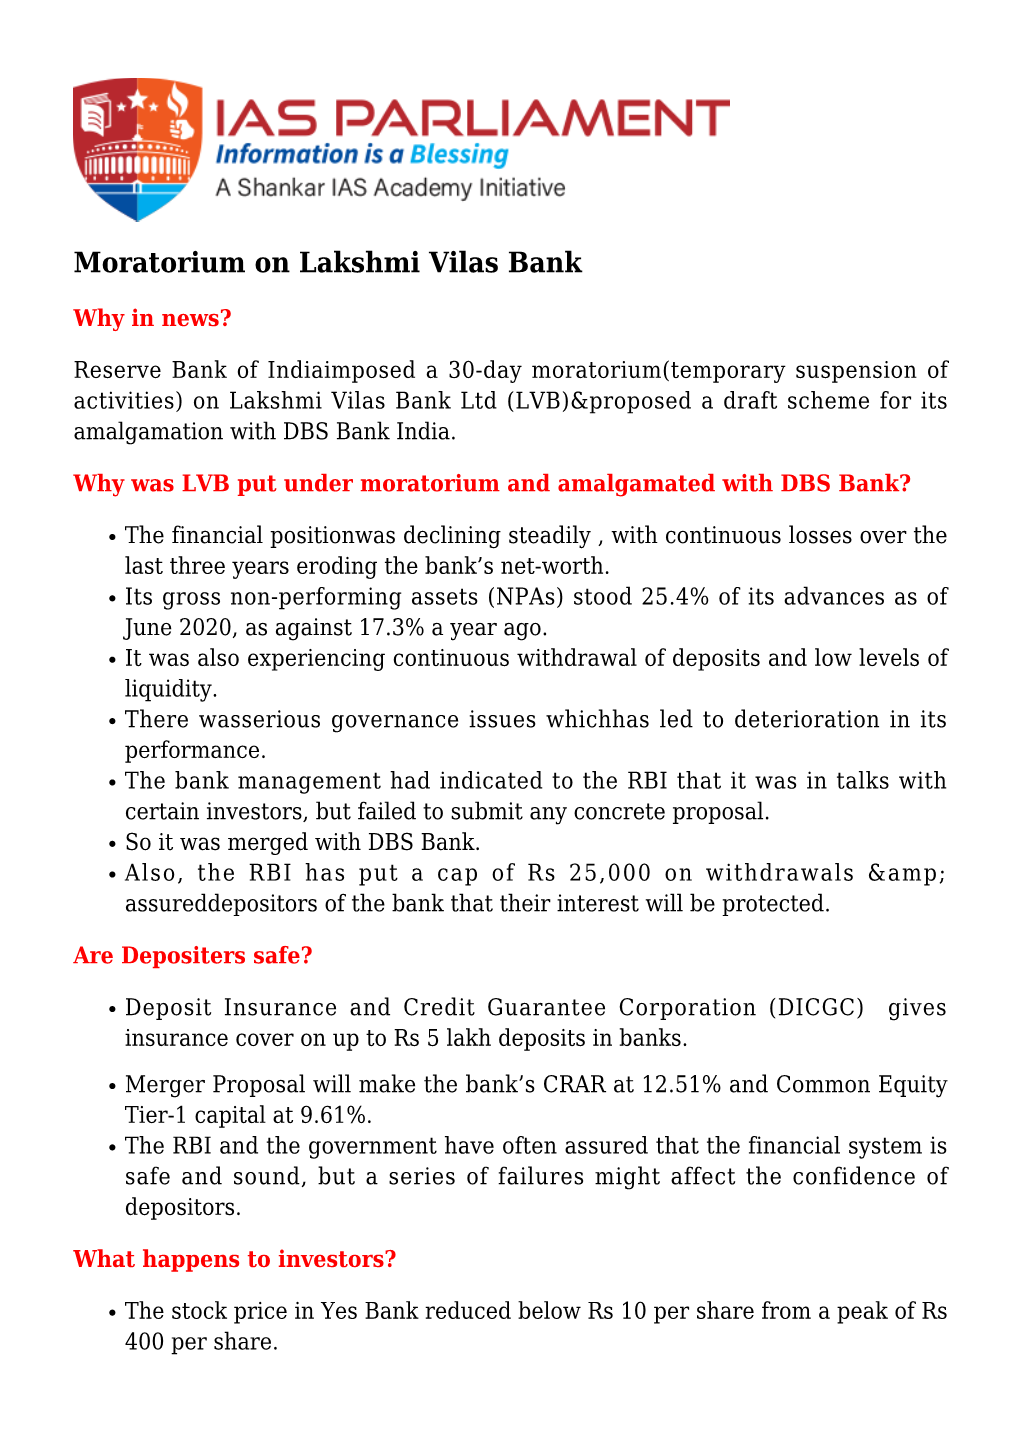 Moratorium on Lakshmi Vilas Bank